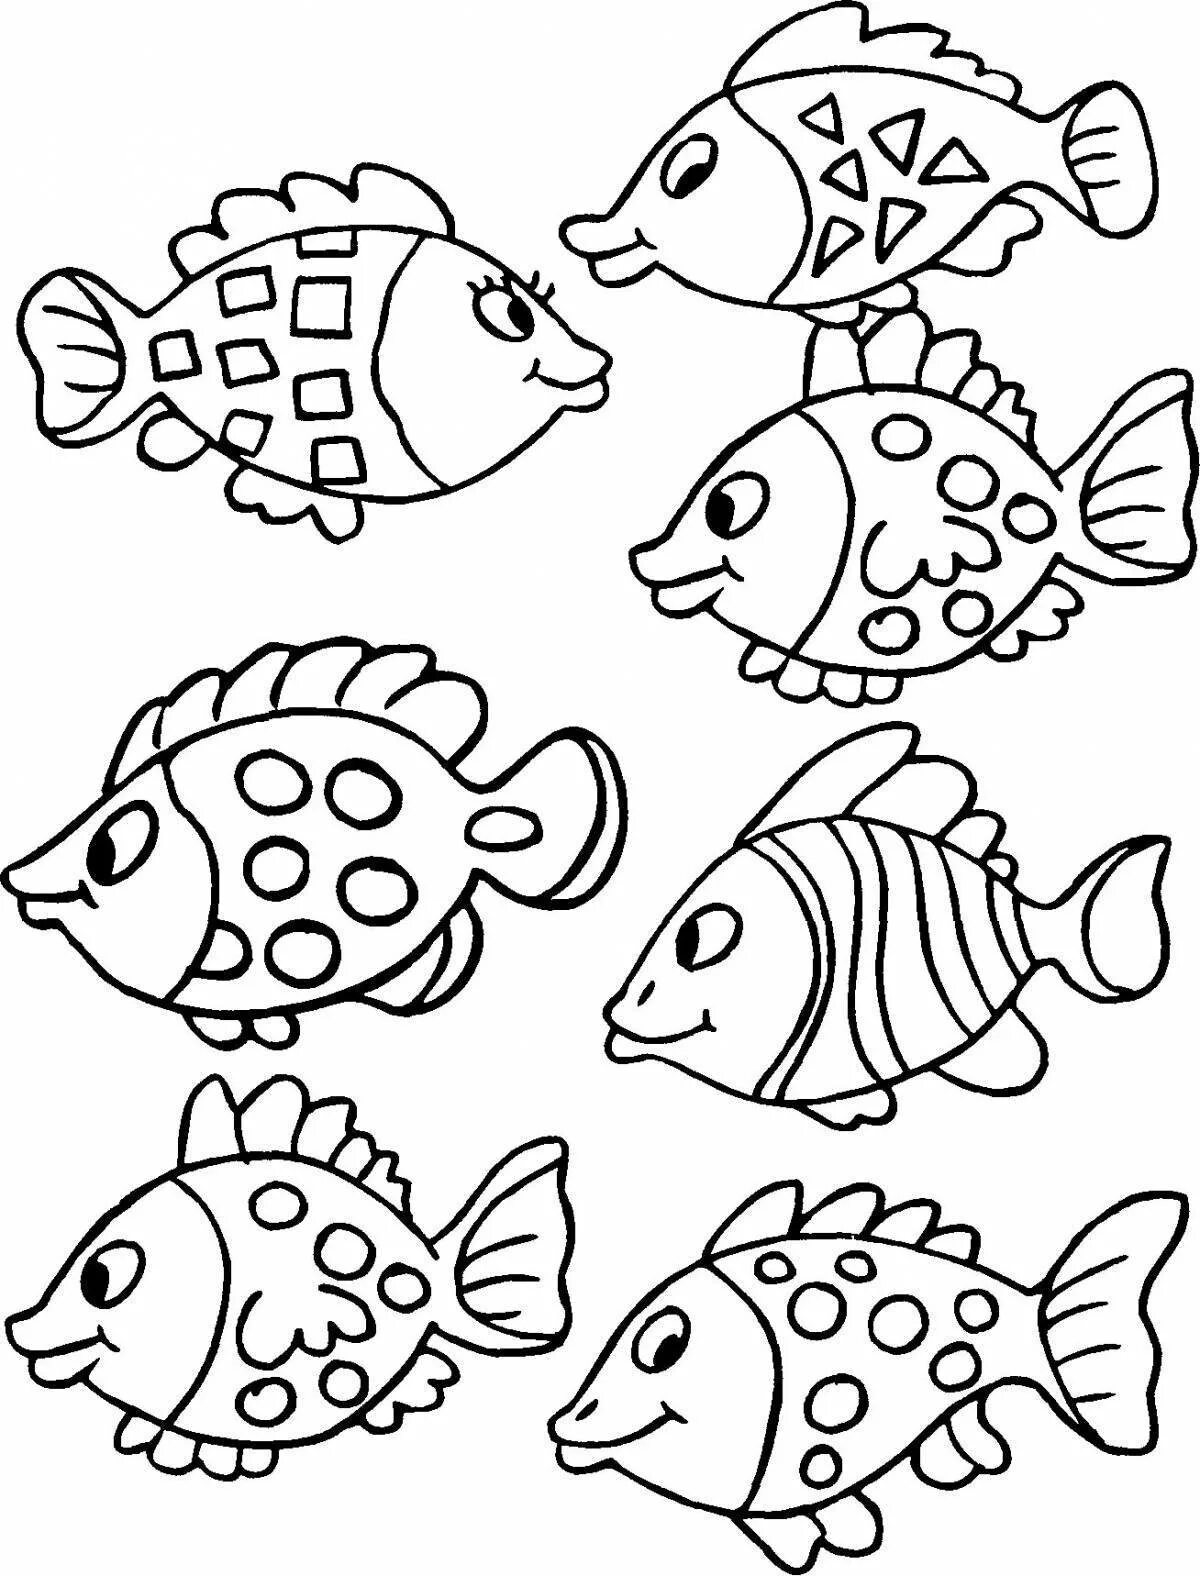 Раскраска рыбы для детей 7 лет. Рыба раскраска. Раскраска рыбка. Маленькие рыбки раскраска. Маленькие рыбки для разукрашивания.